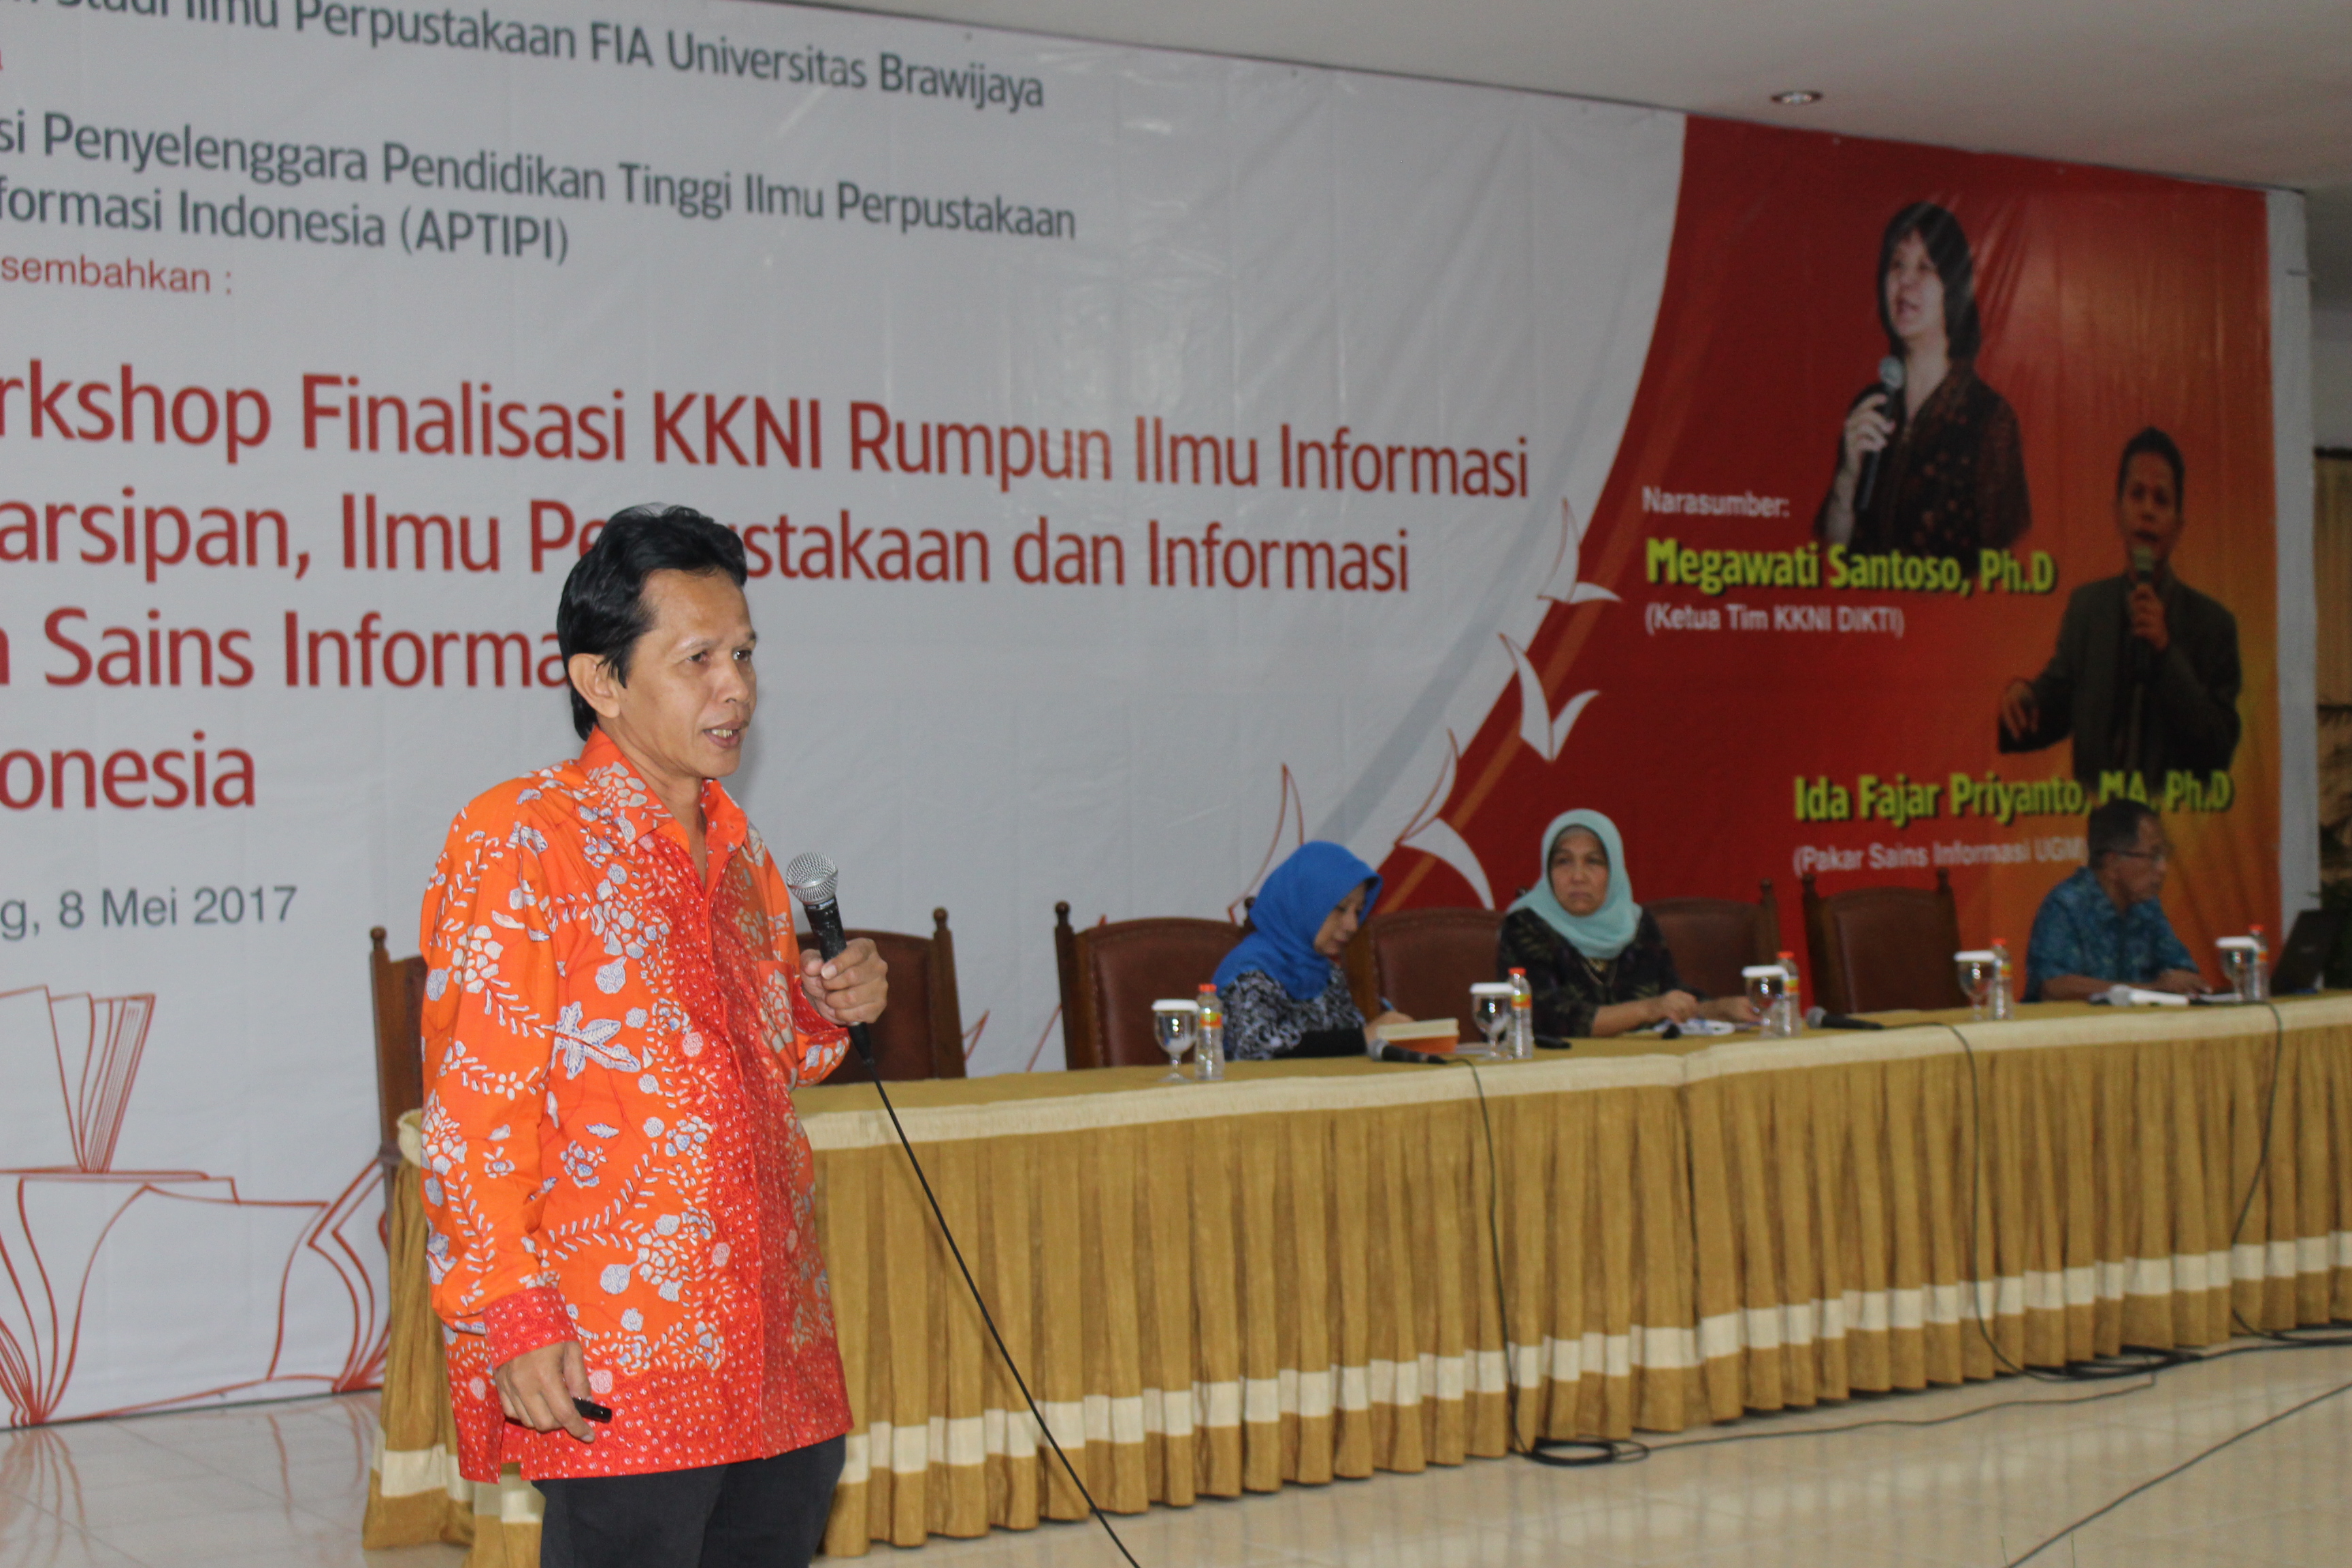 Pengelola Rumpun Ilmu Informasi Se-Indonesia Bahas Finalisasi KKNI Di FIA UB